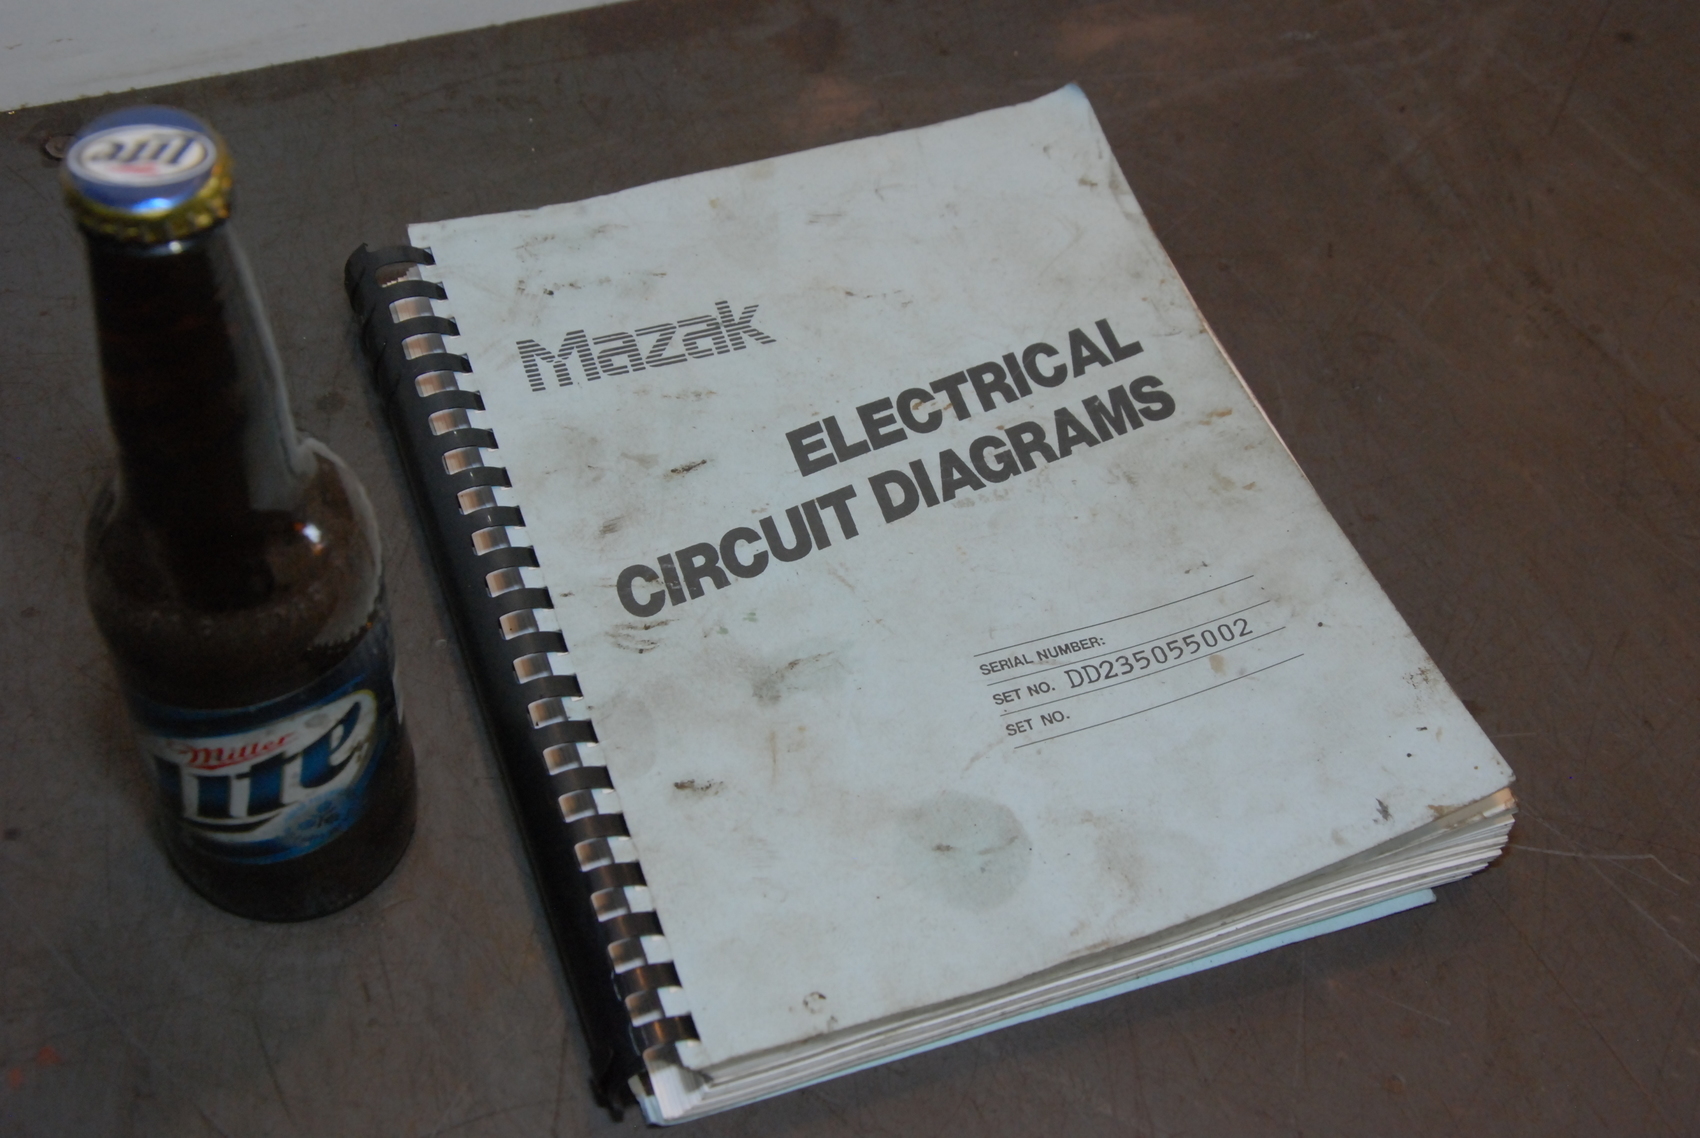 Mazak Electrical Circuit Diagrams,Set:DD235055002